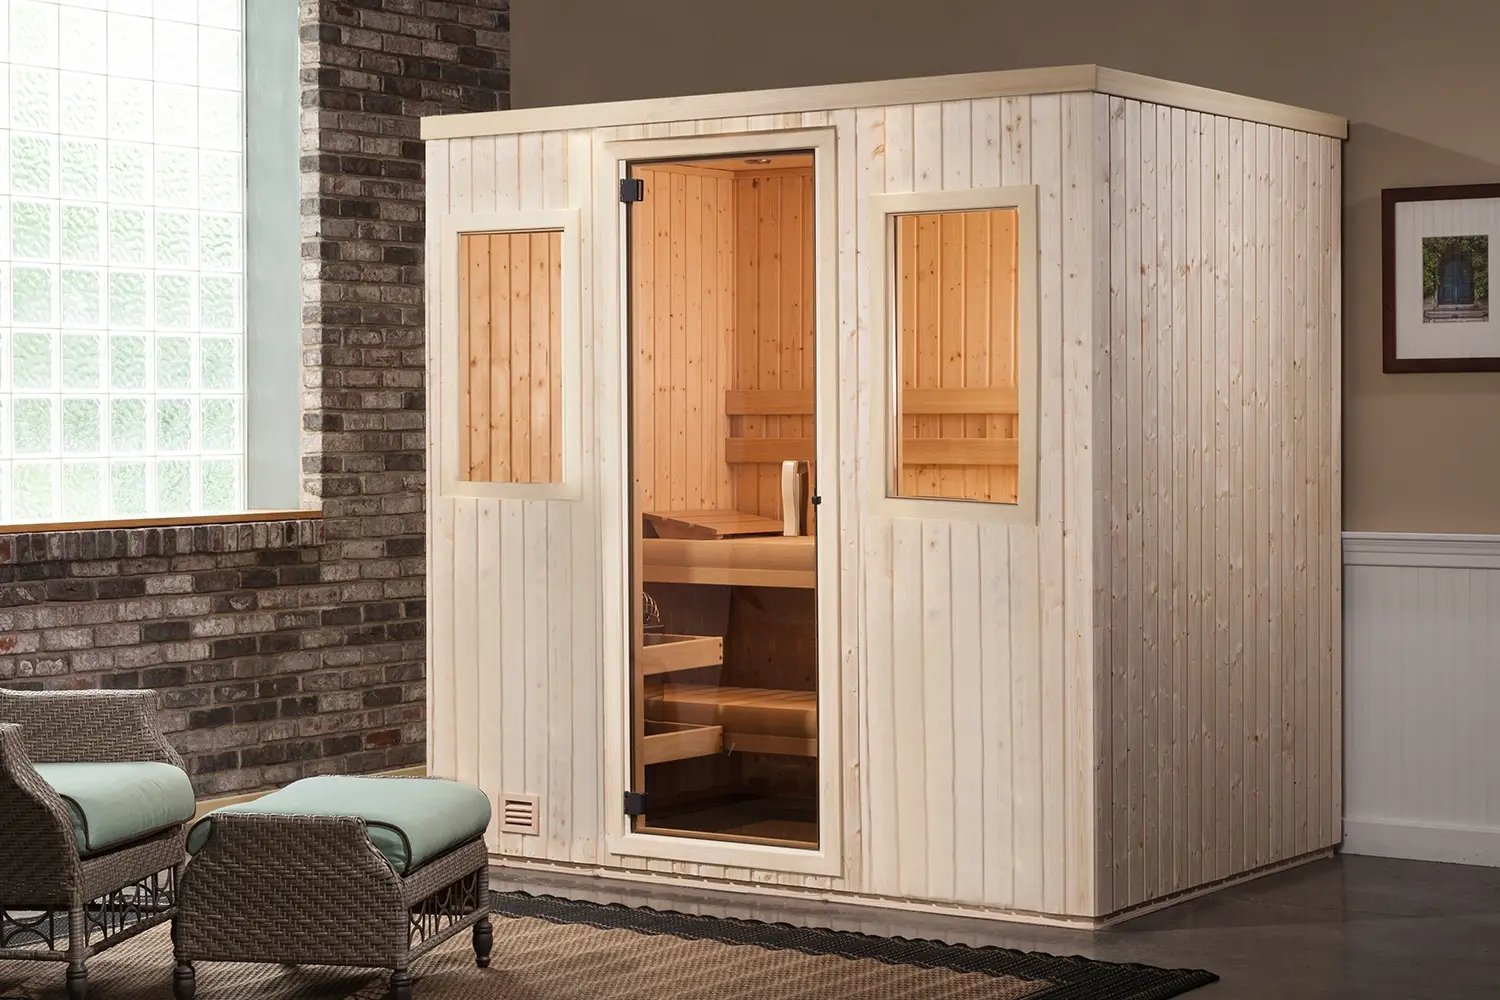 Site-Image-Custom Freestanding Indoor_Sisu saunas stand free_1500x1000